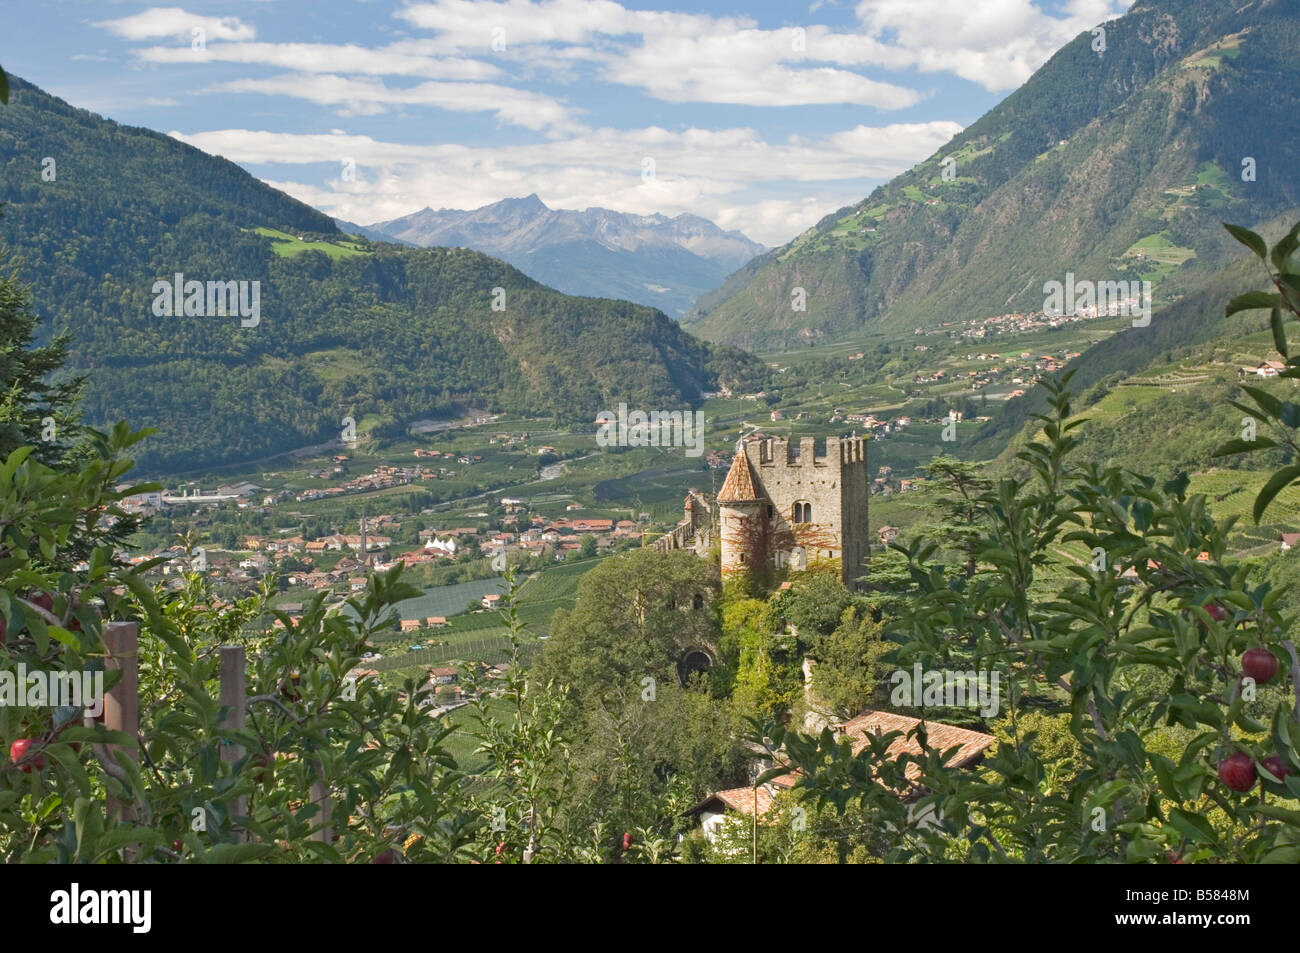 Brunnenburg Castle, Dorf Tyrol, Merano, Sud Tyrol (South Tirol), Bolzano, Trentino-Alto Adige, Italy Stock Photo